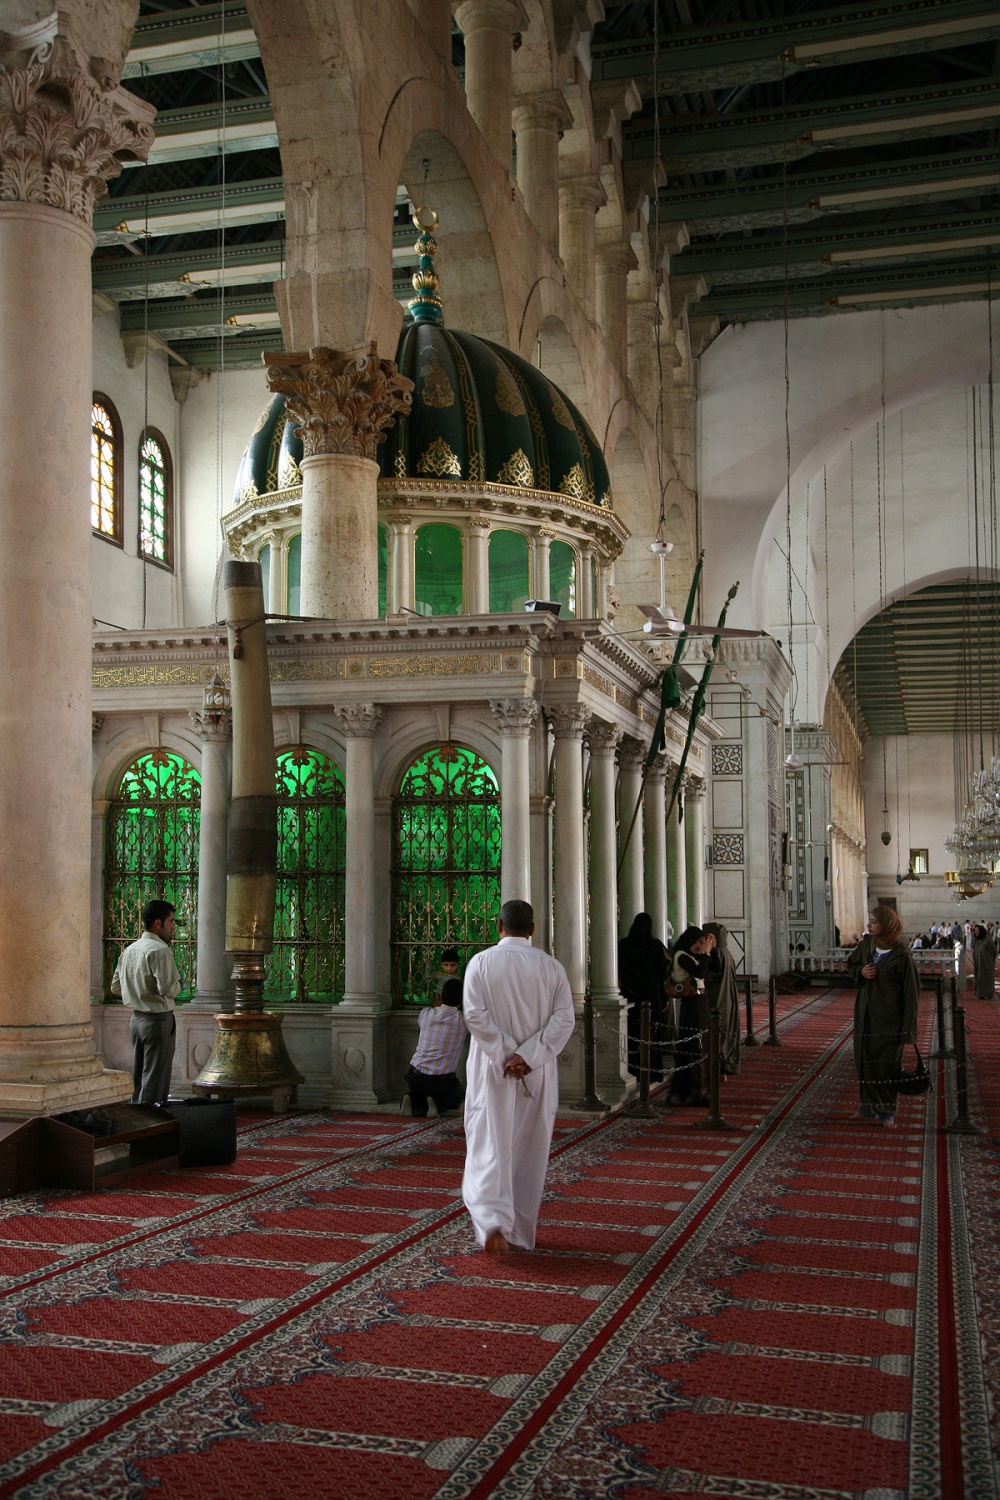 bill-hocker-shrine-of-john-the-baptist-umayyad-mosque-damascus-syria-2008